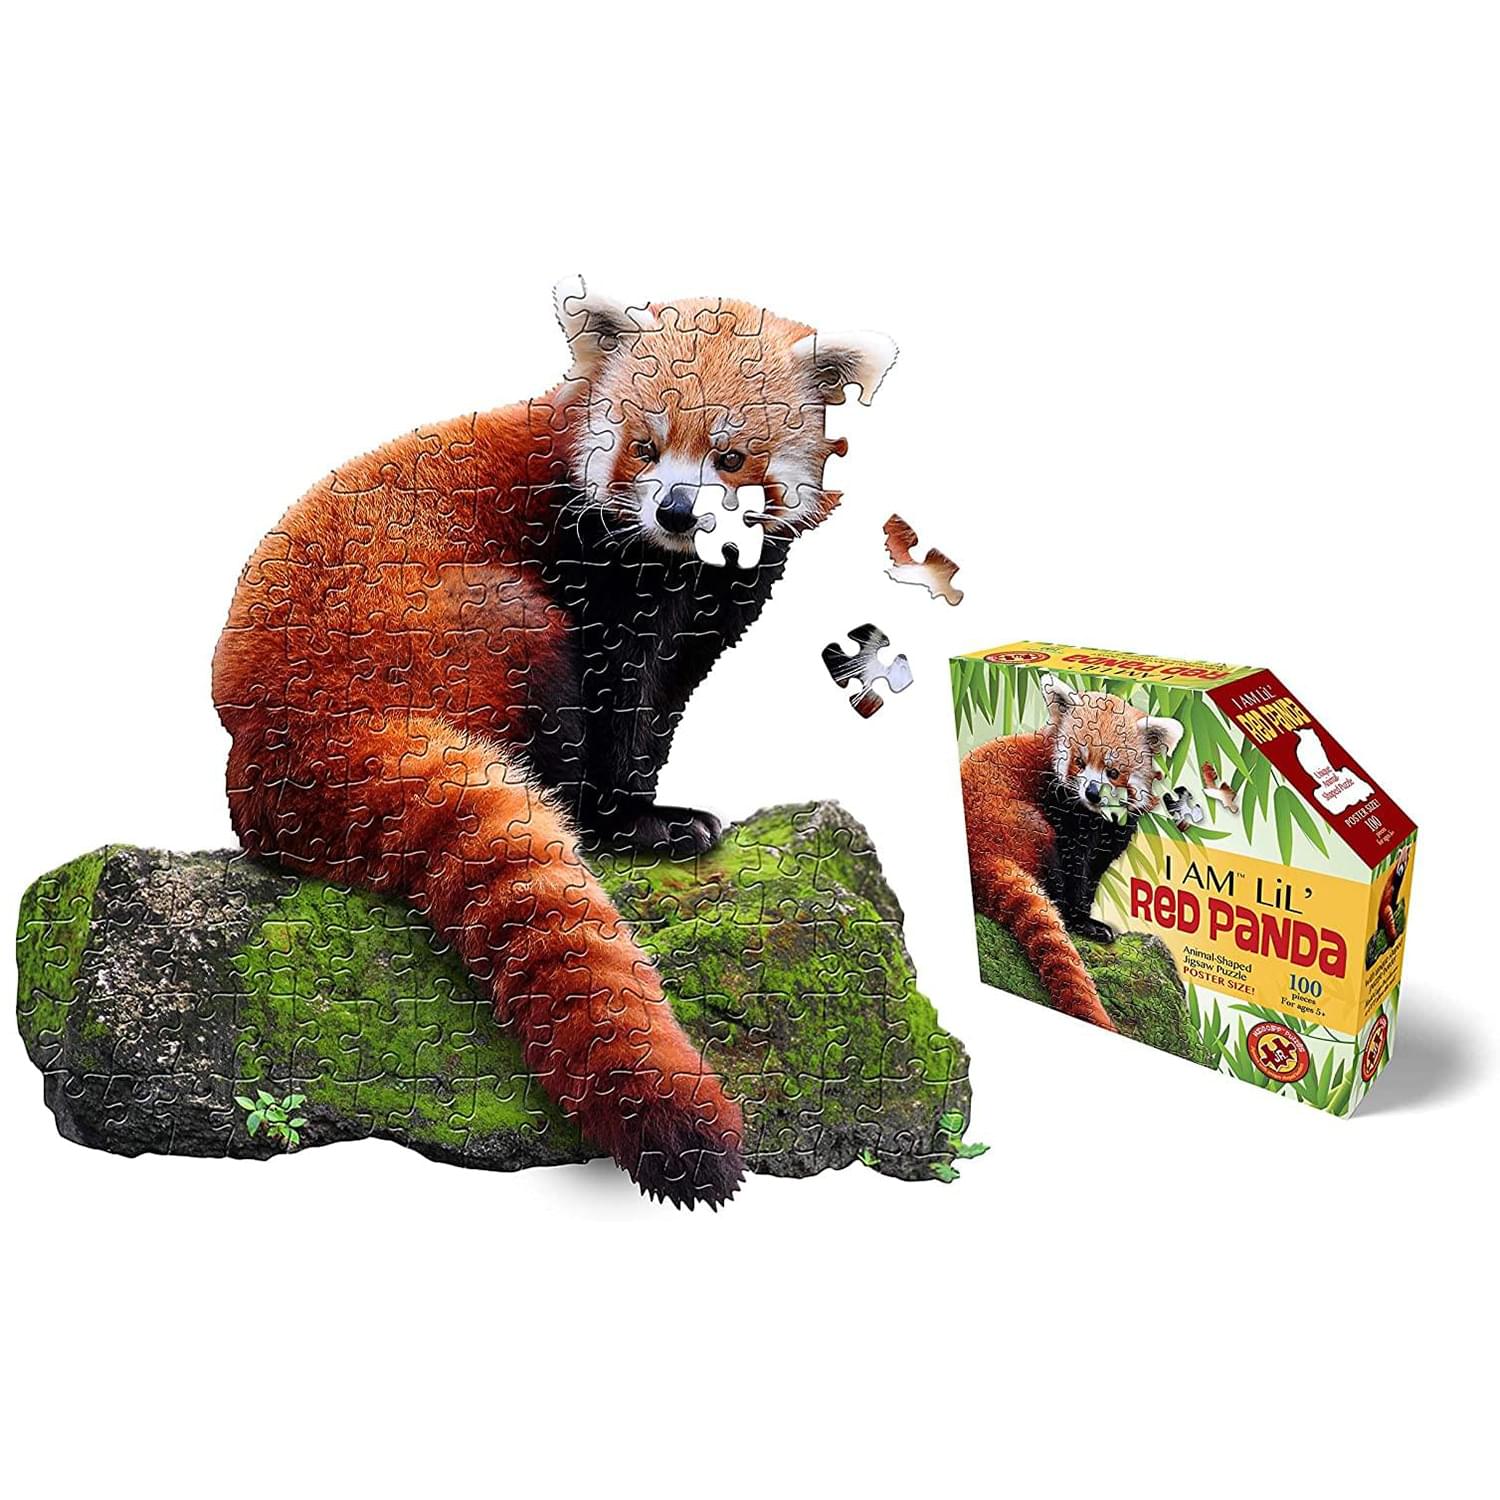 I AM Lil Red Panda 100 Piece Animal-Shaped Jigsaw Puzzle